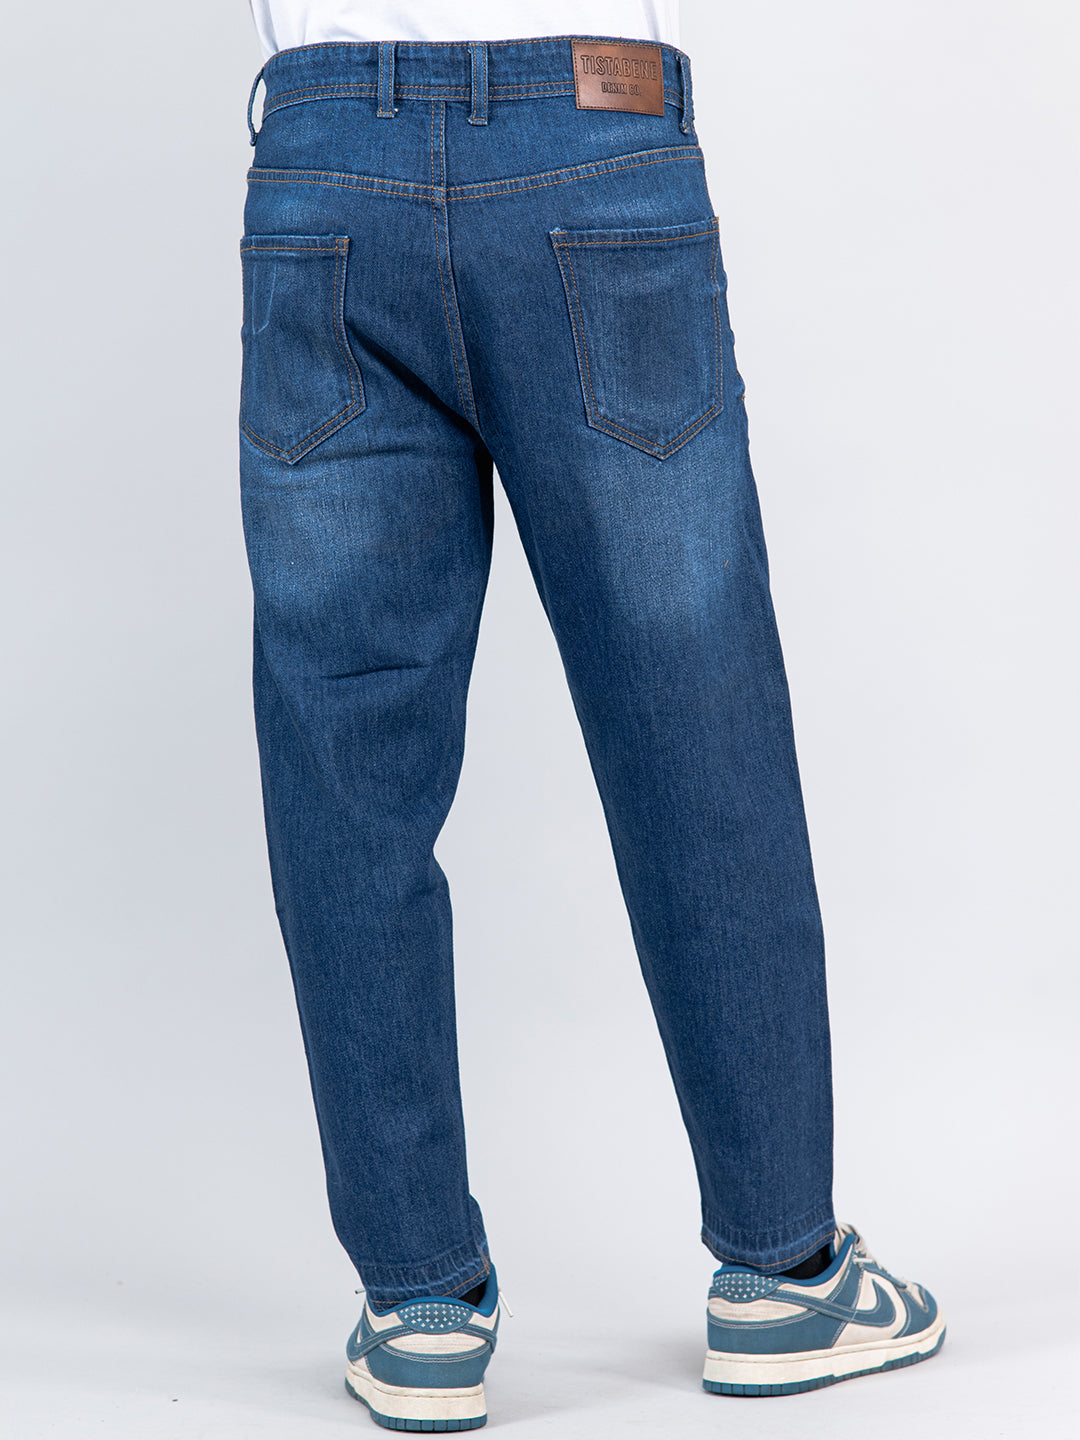 Qiufuyoukz Mens Beach Pants, Men's Trousers Stretch Ripped Holes Ankle-Length  Jeans Male Gray Pants (Size : XXX-Large) price in Saudi Arabia | Amazon  Saudi Arabia | kanbkam